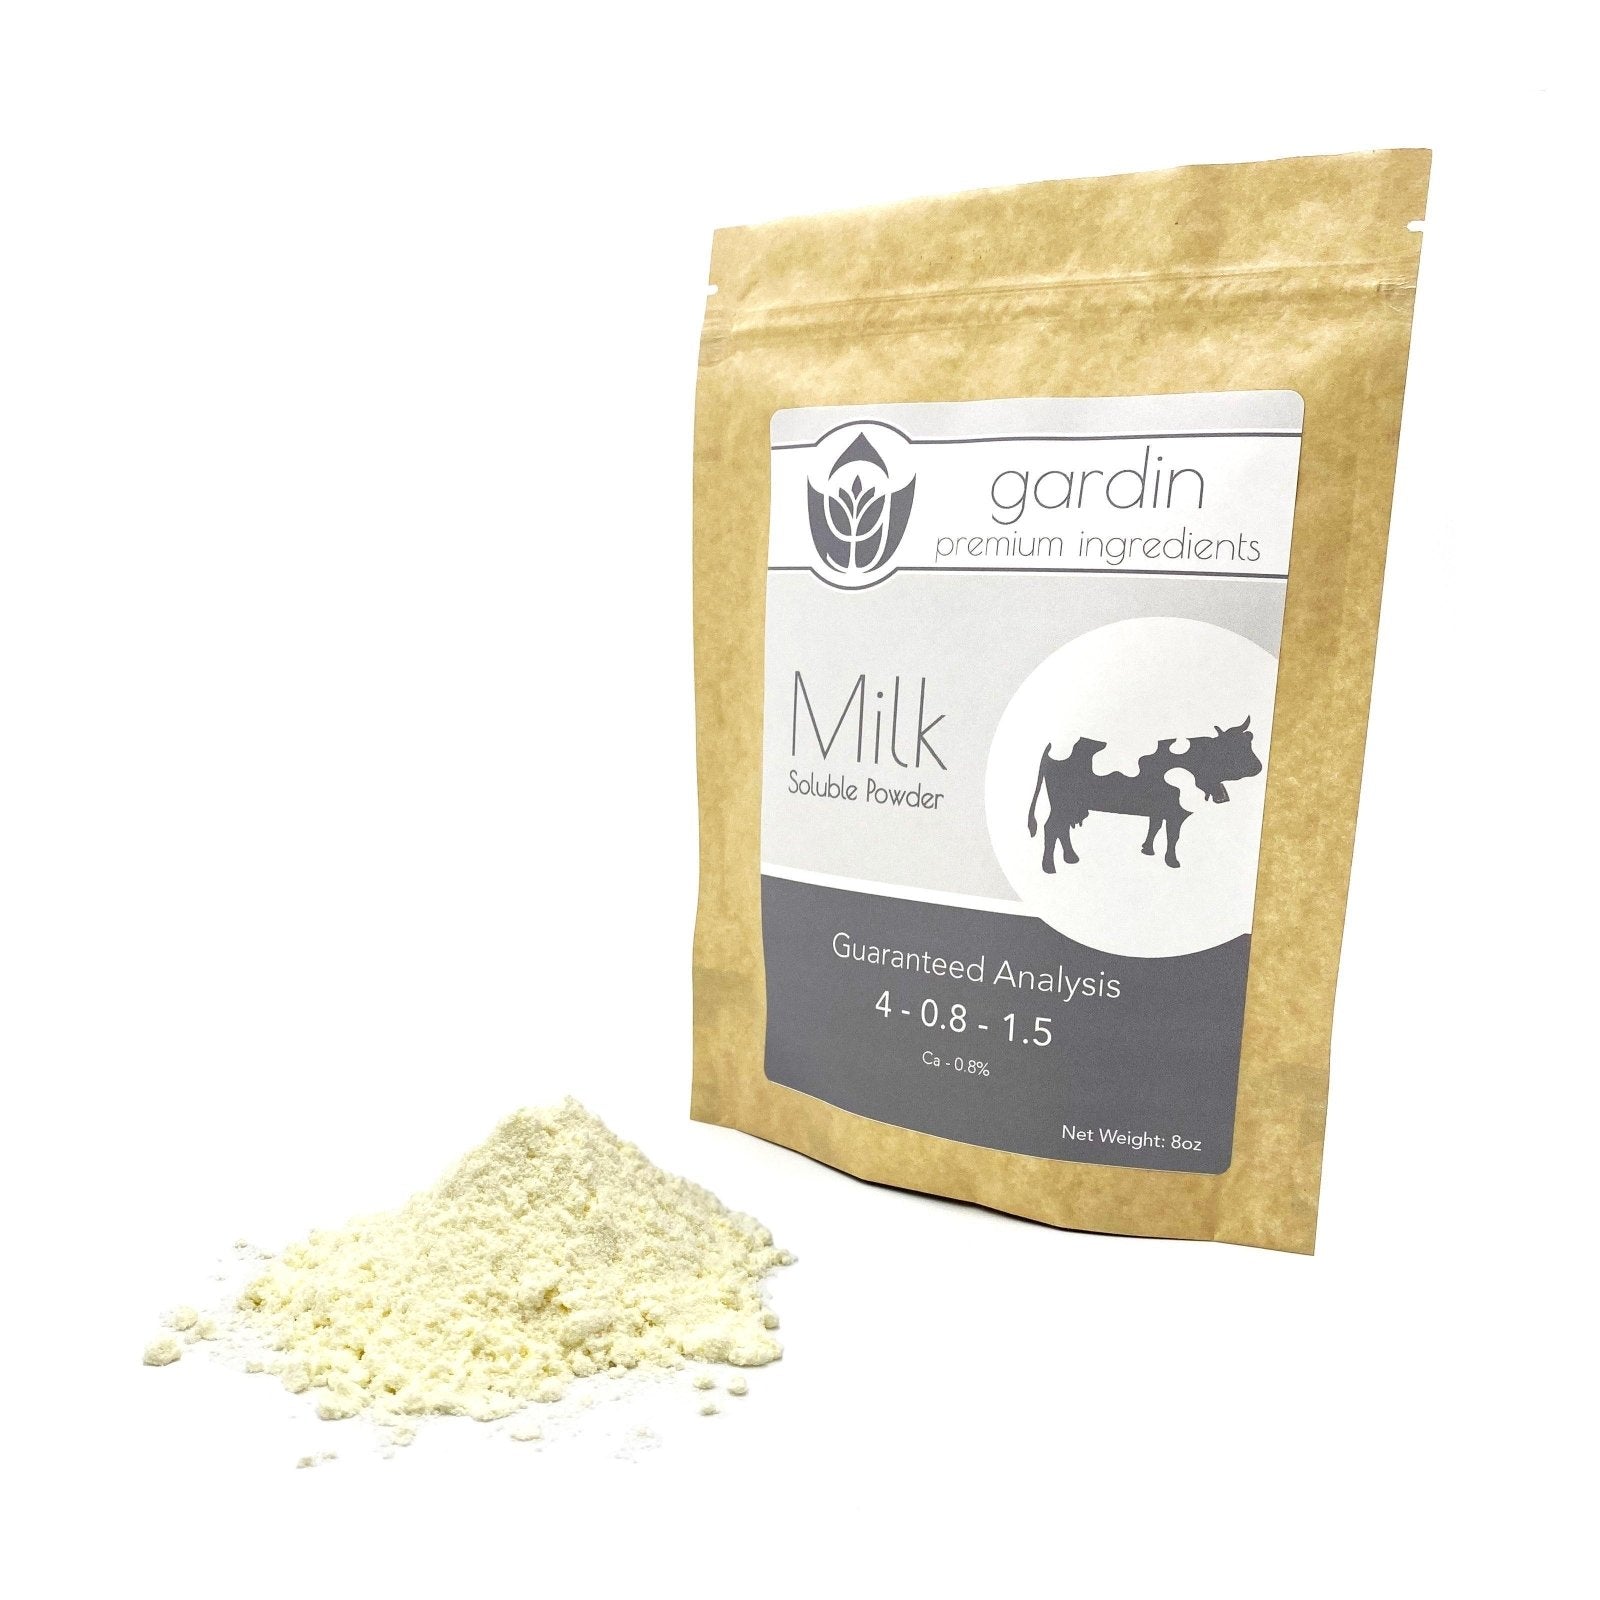 Nutrients, Additives & Solutions - Milk - Powder - Gardin Warehouse